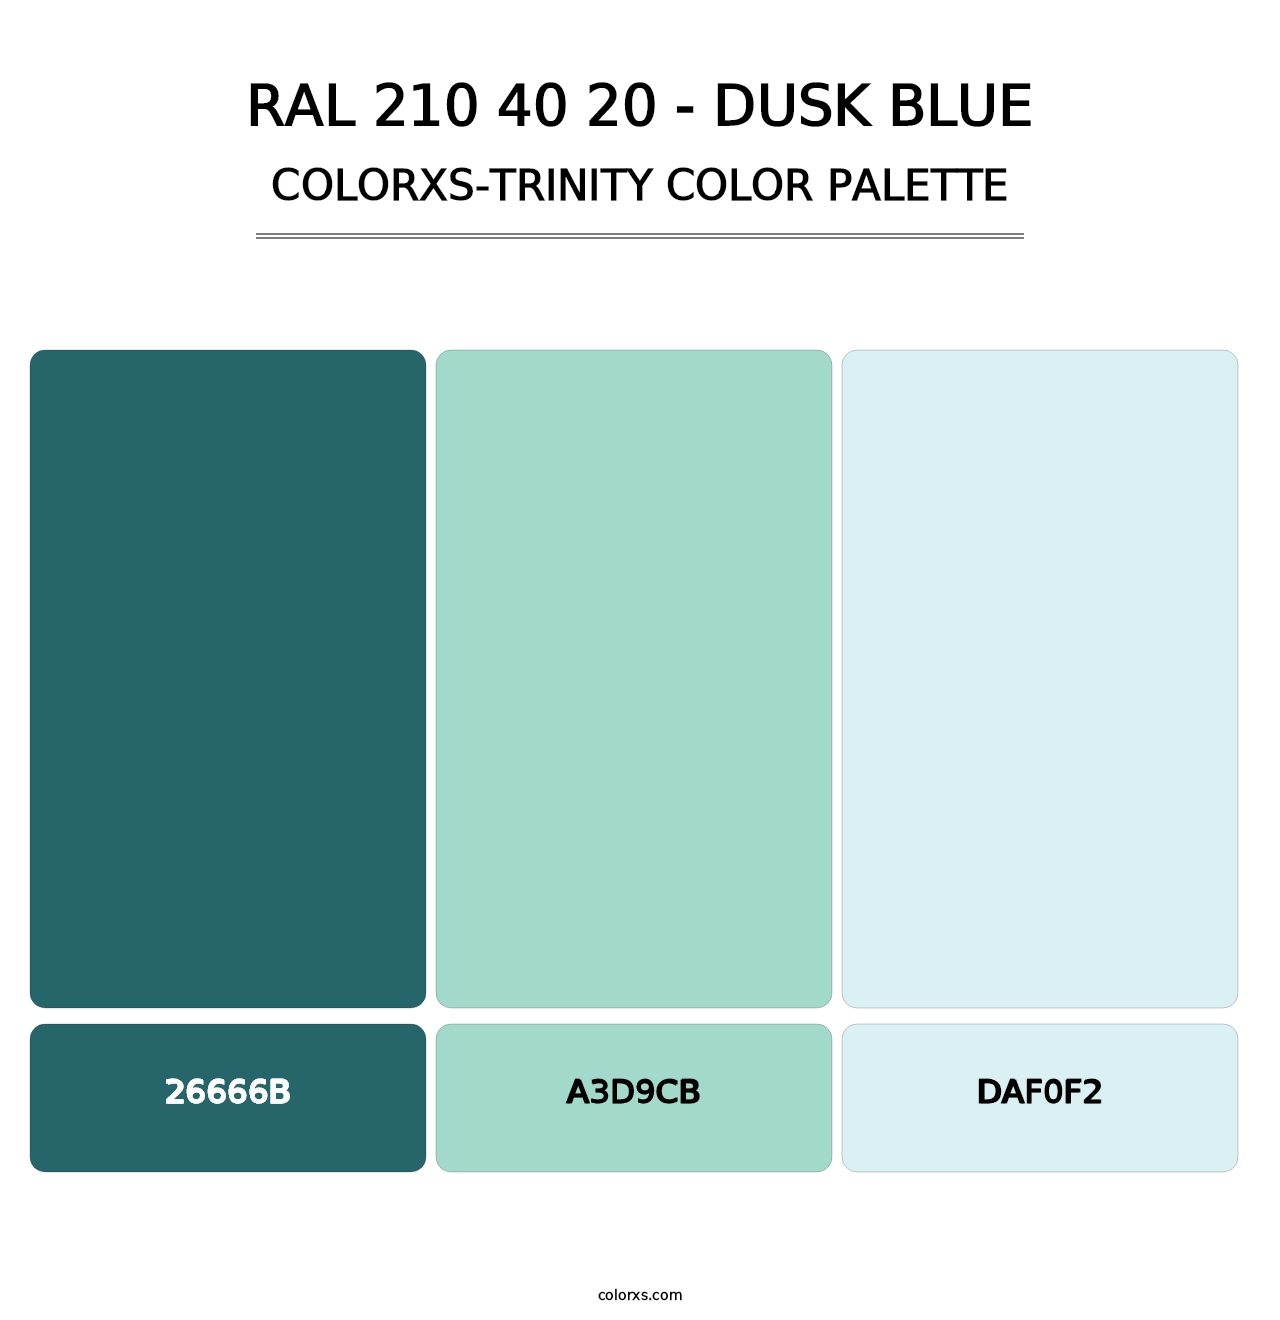 RAL 210 40 20 - Dusk Blue - Colorxs Trinity Palette